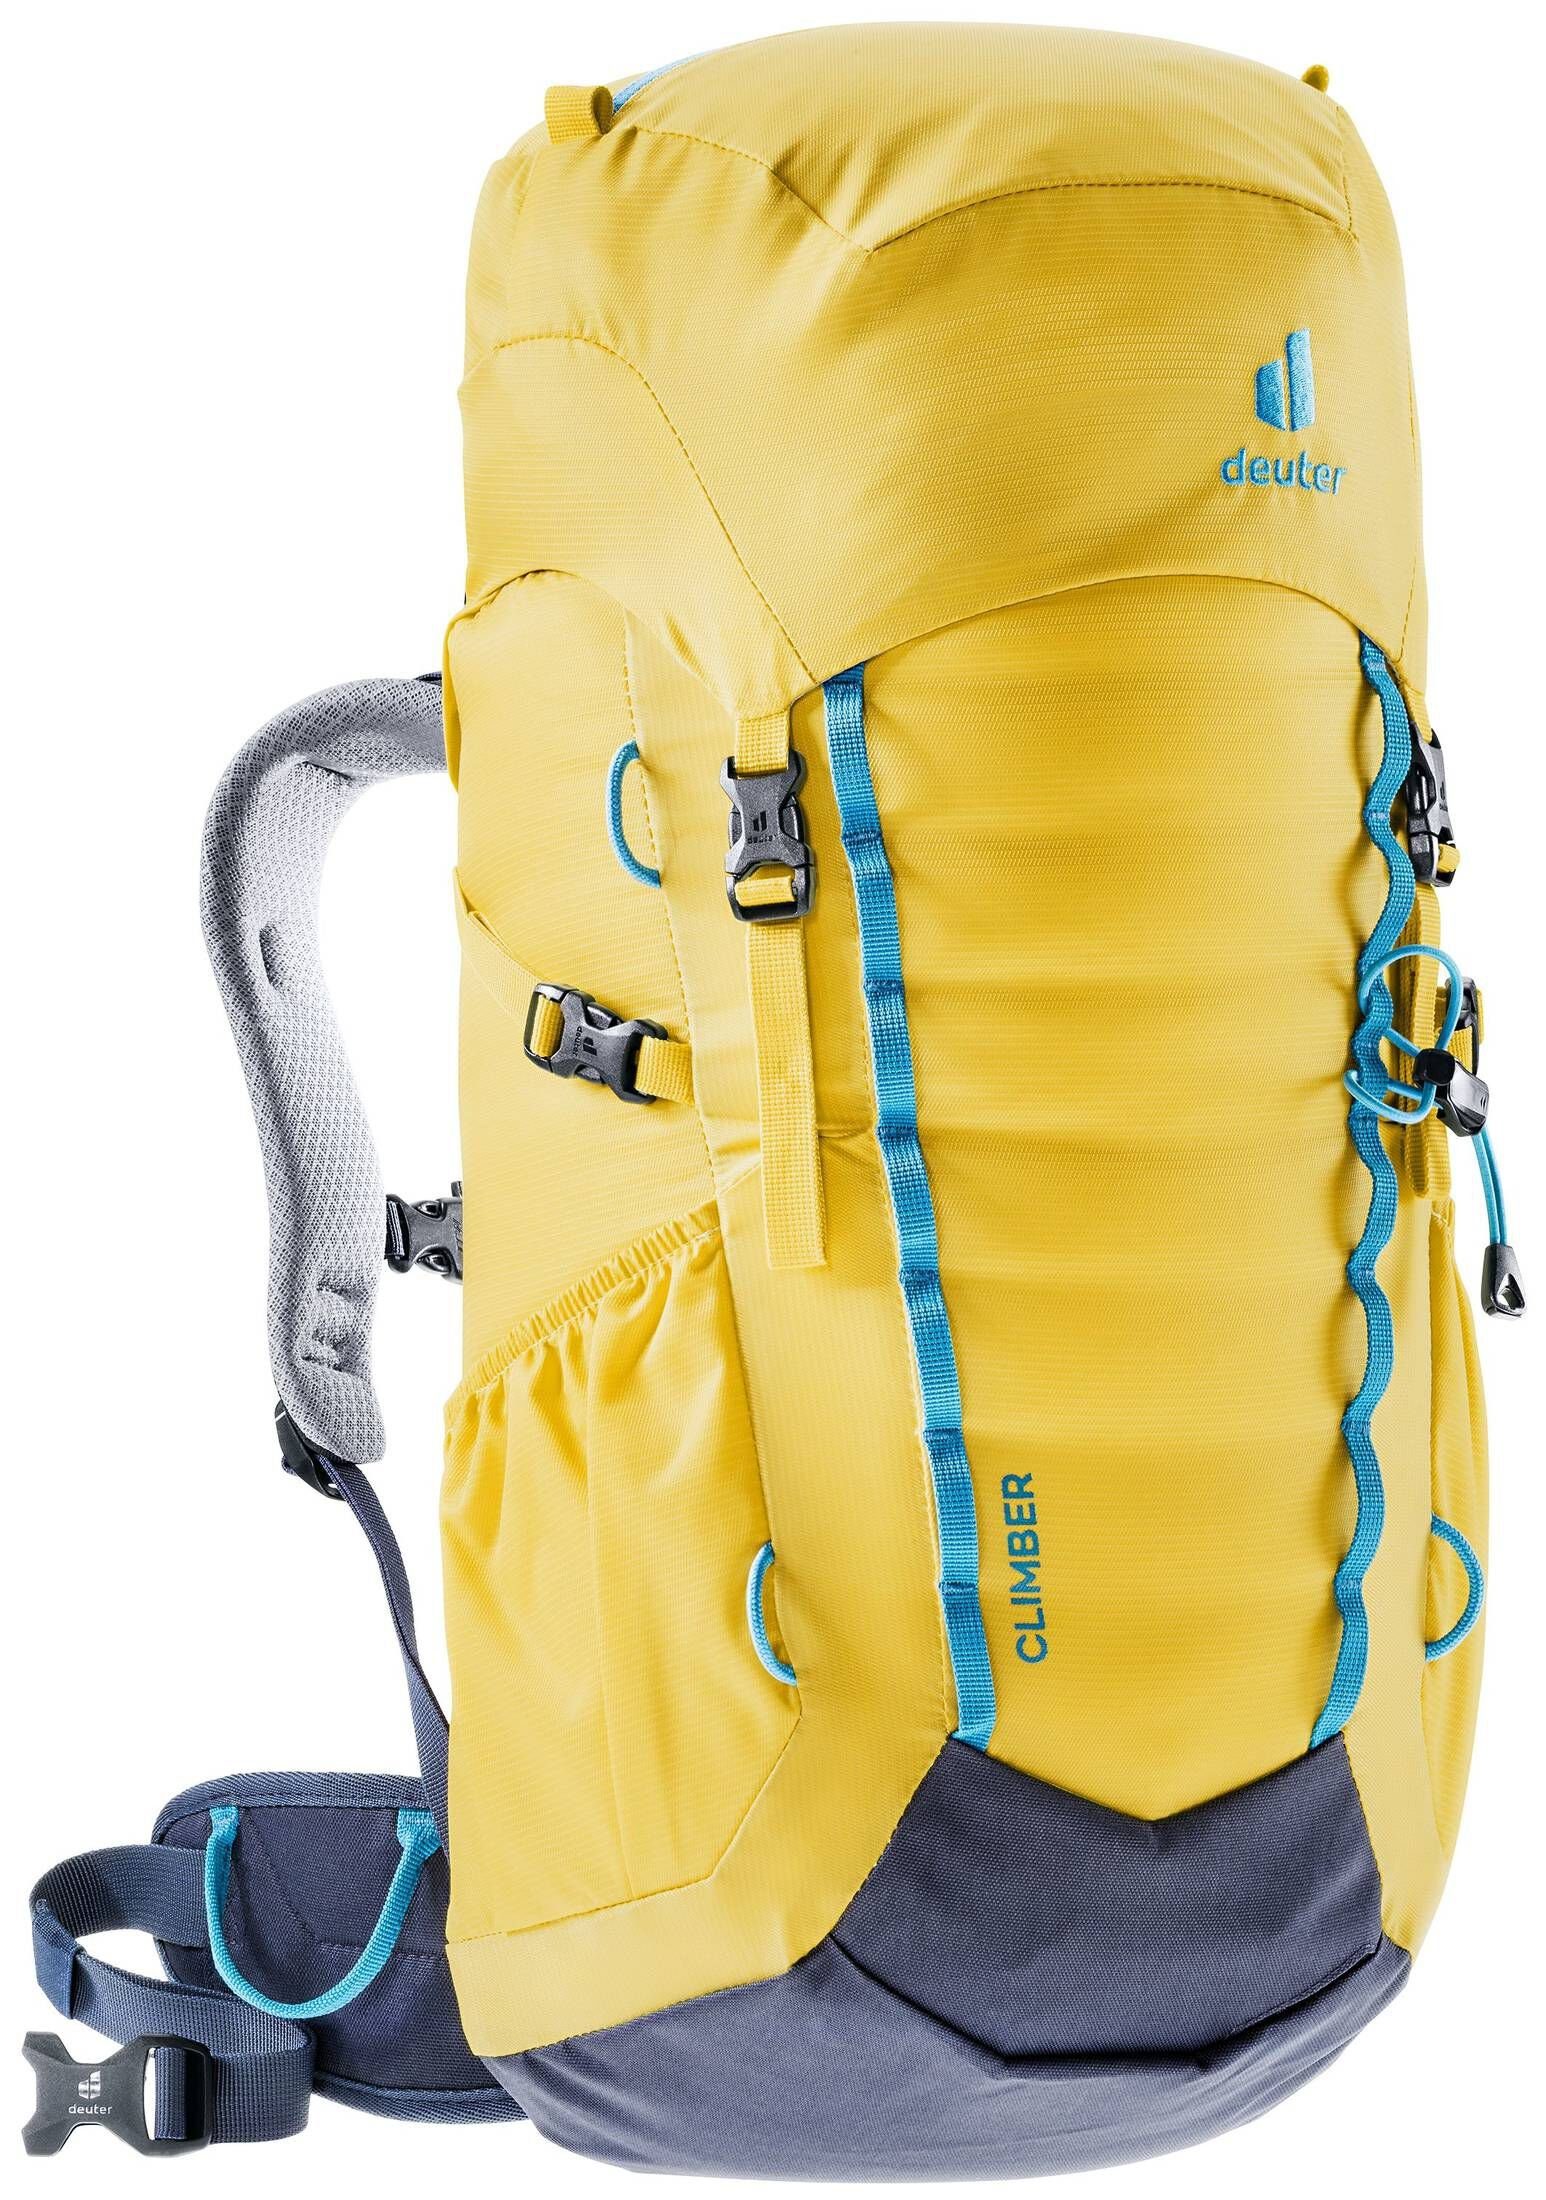 Rucksack Trekkingrucksack (510) deuter gelb Kinder Climber